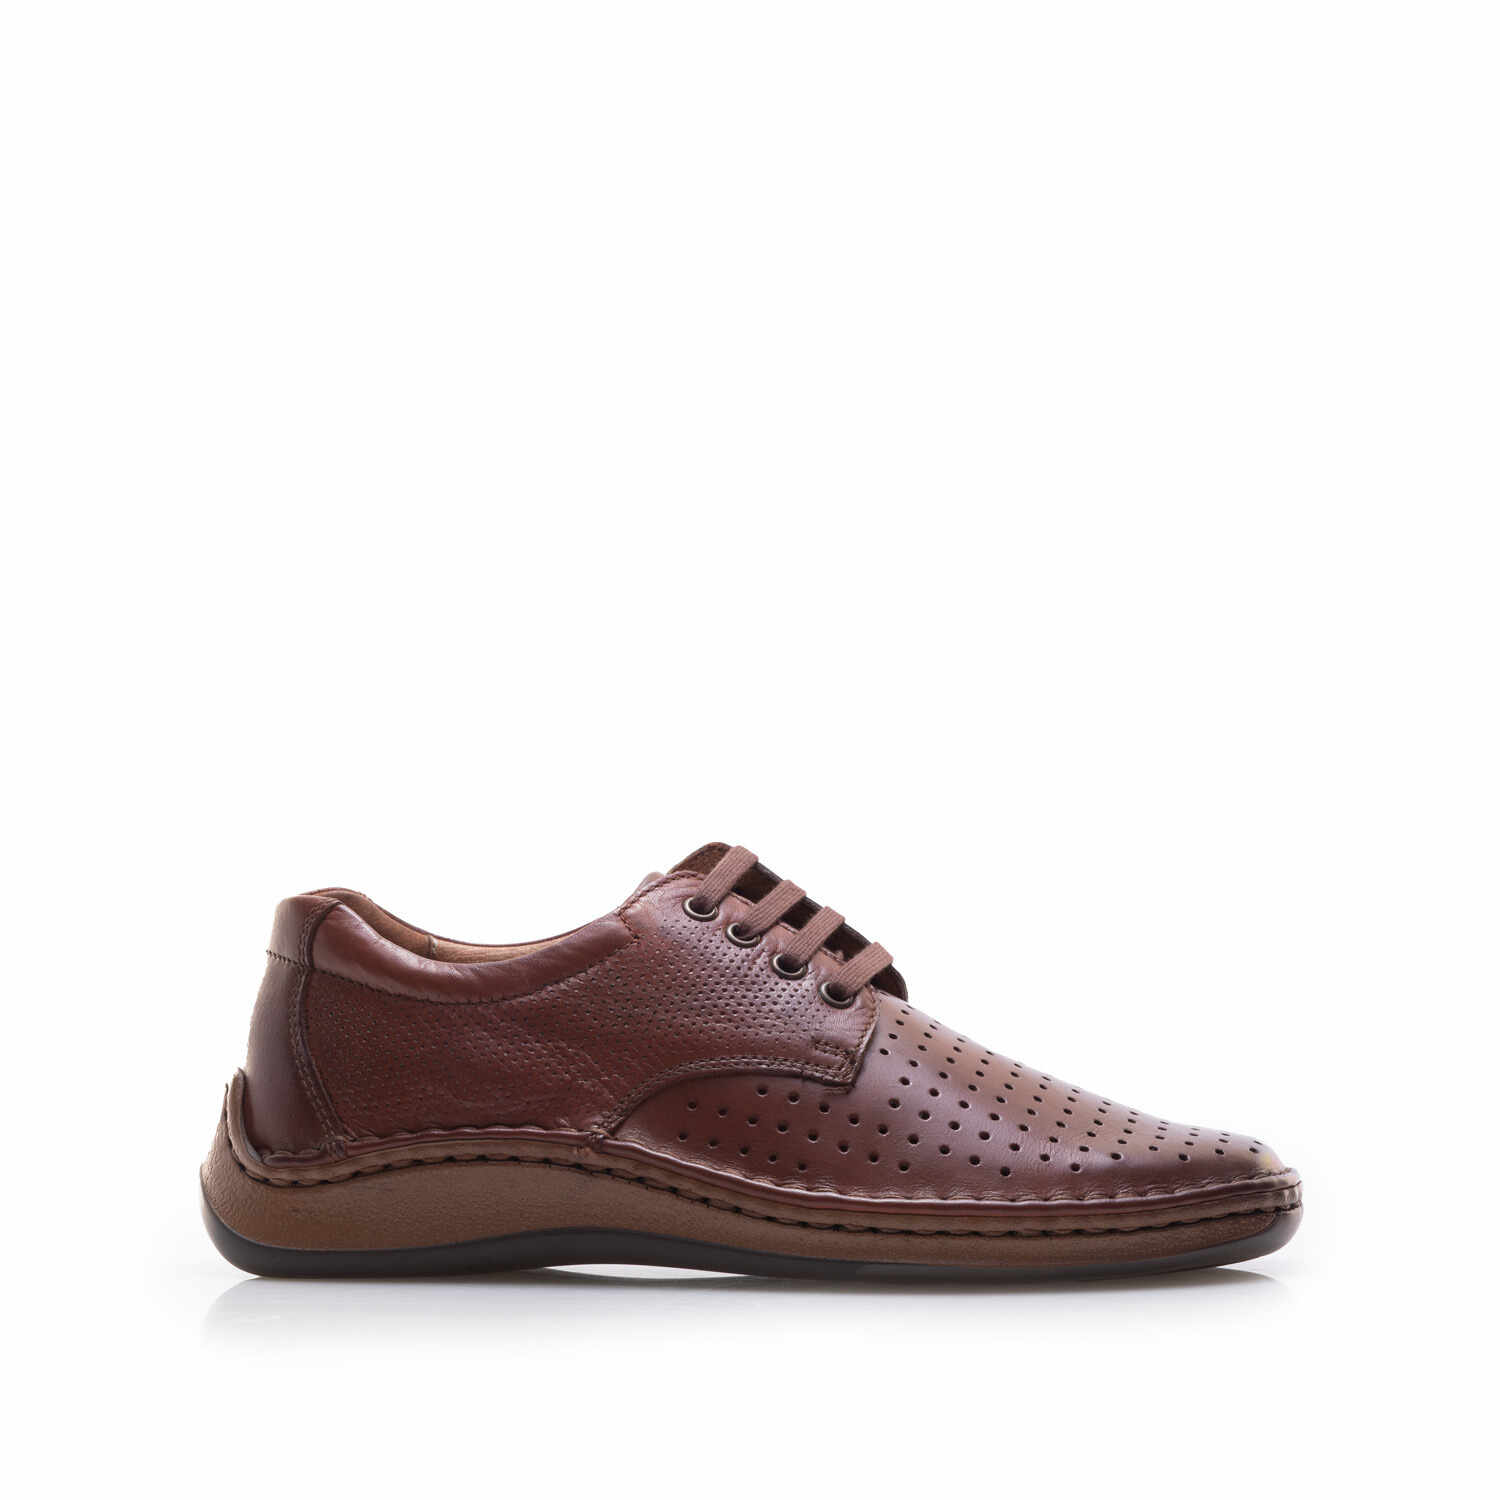 Pantofi casual barbati din piele naturala,Leofex - 594-1 Cognac Box